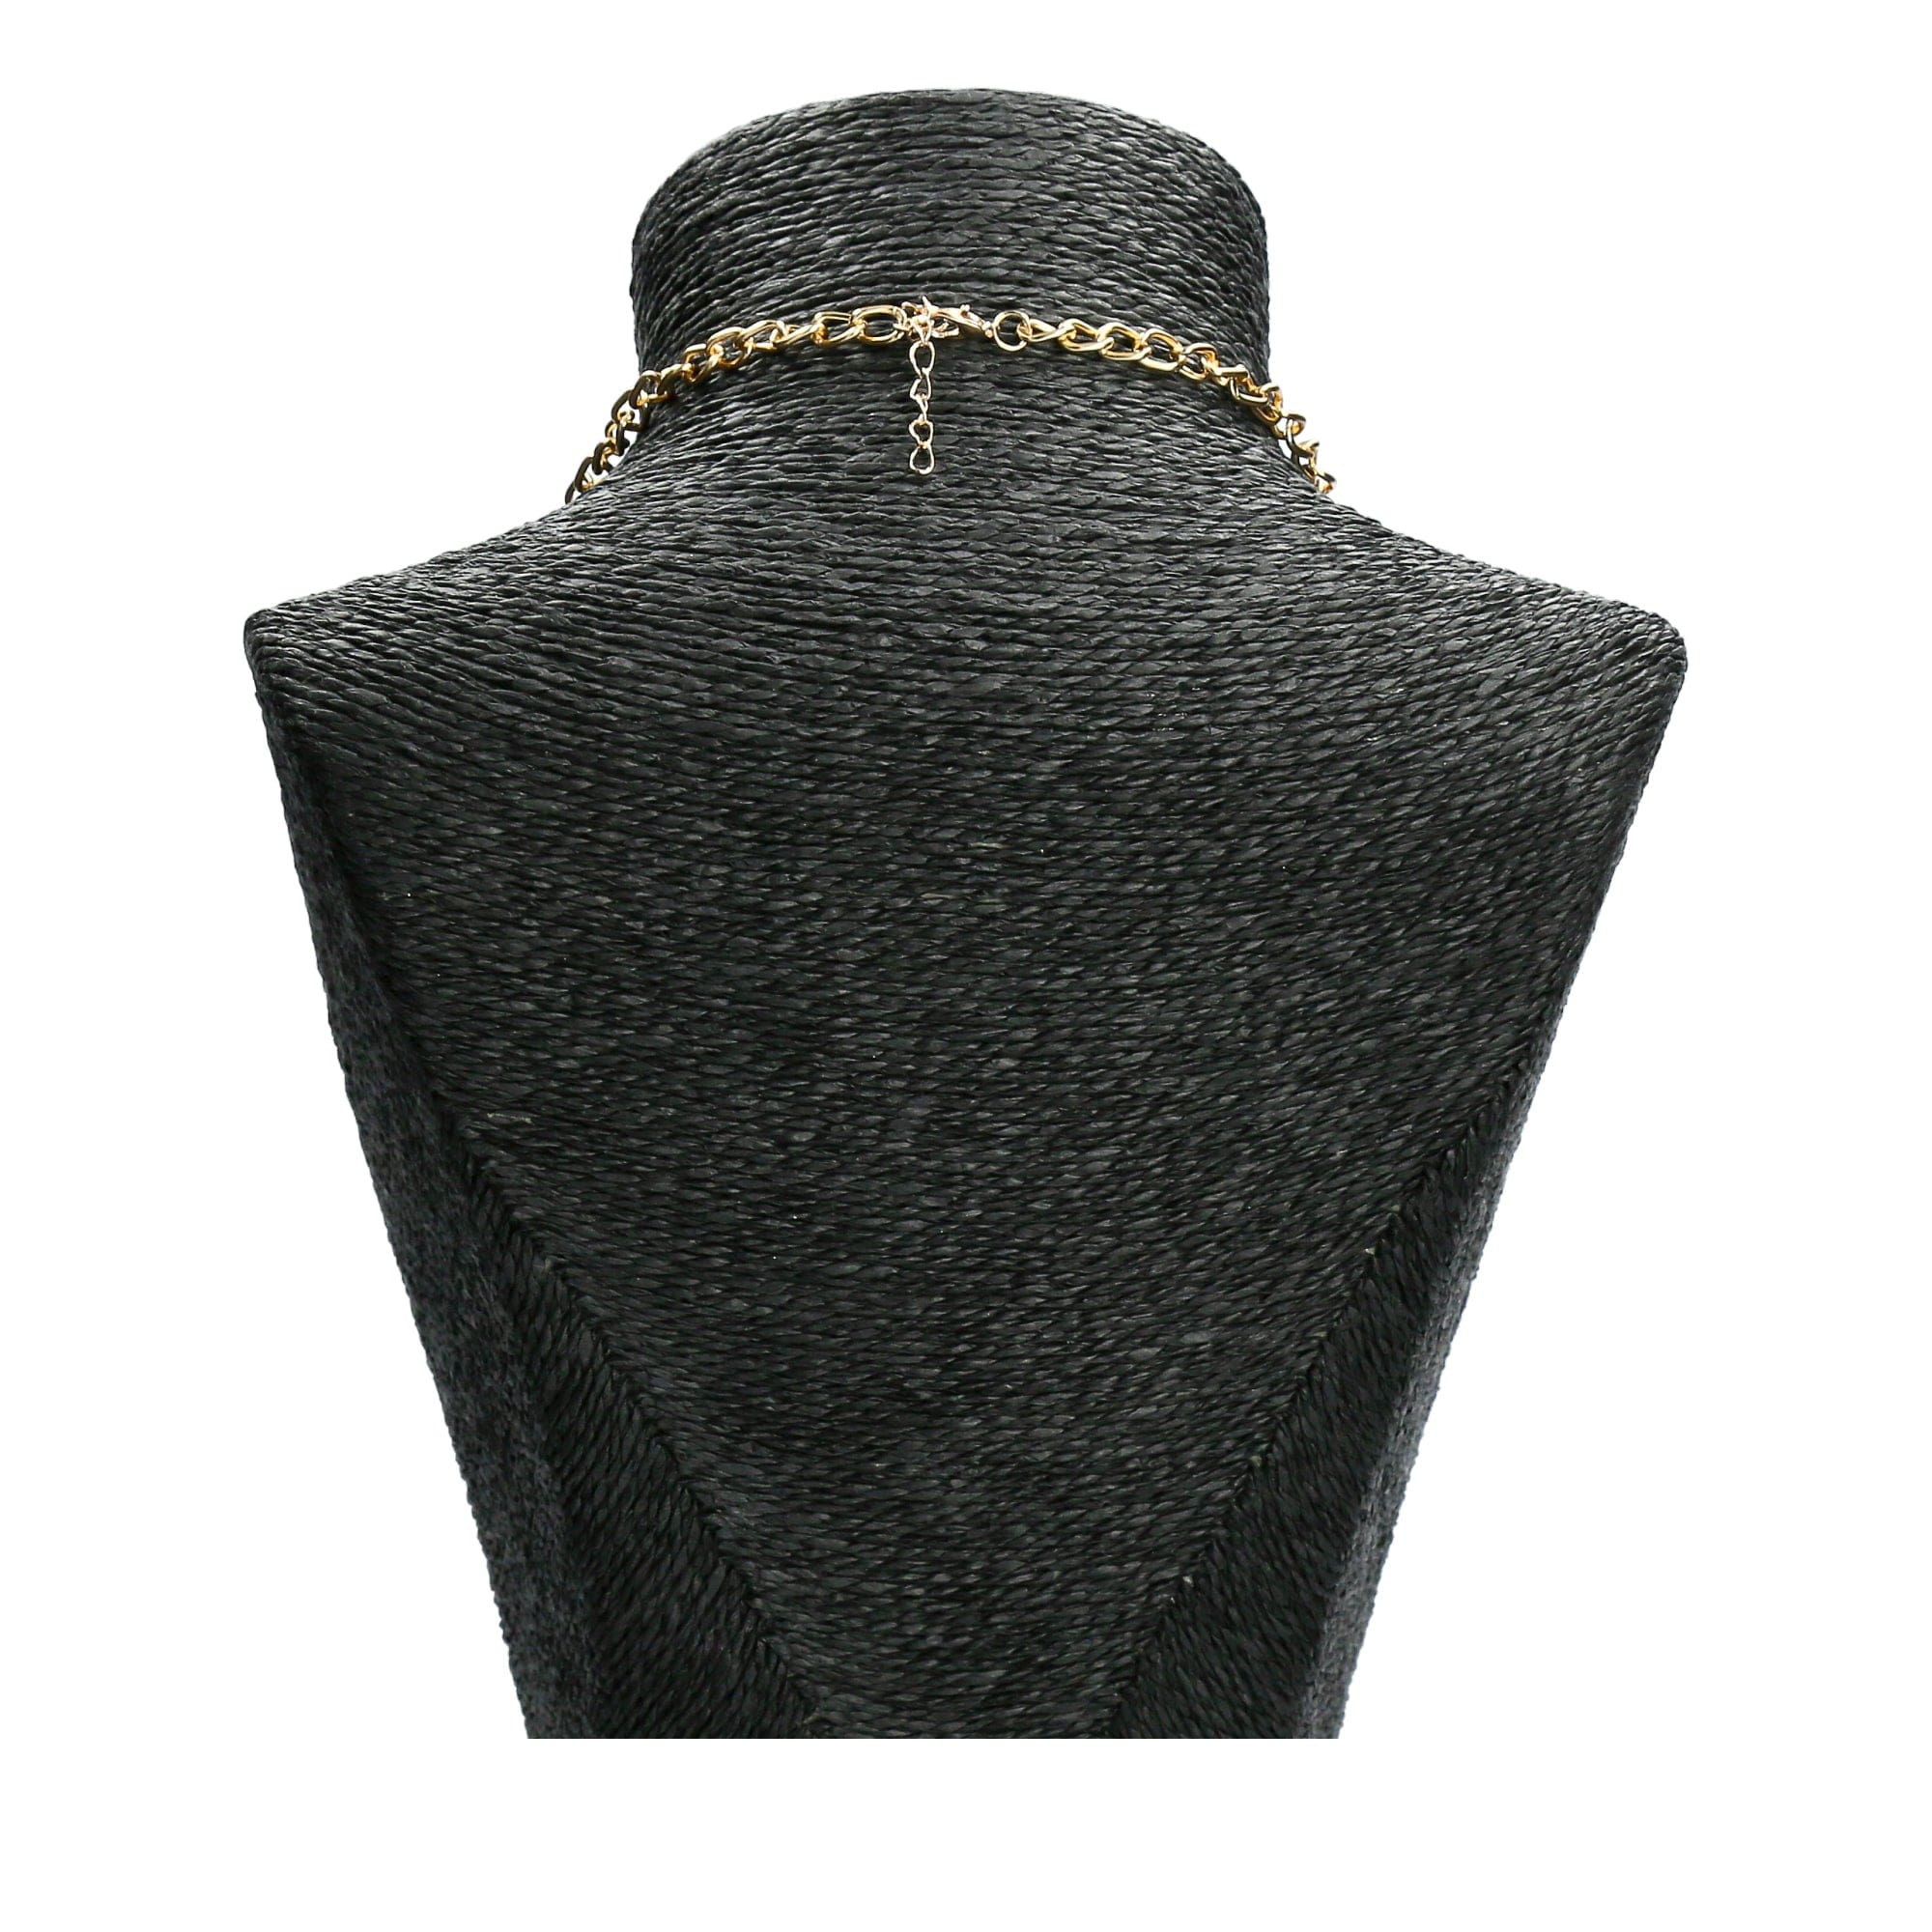 Jewelry set Pannacota - Necklace